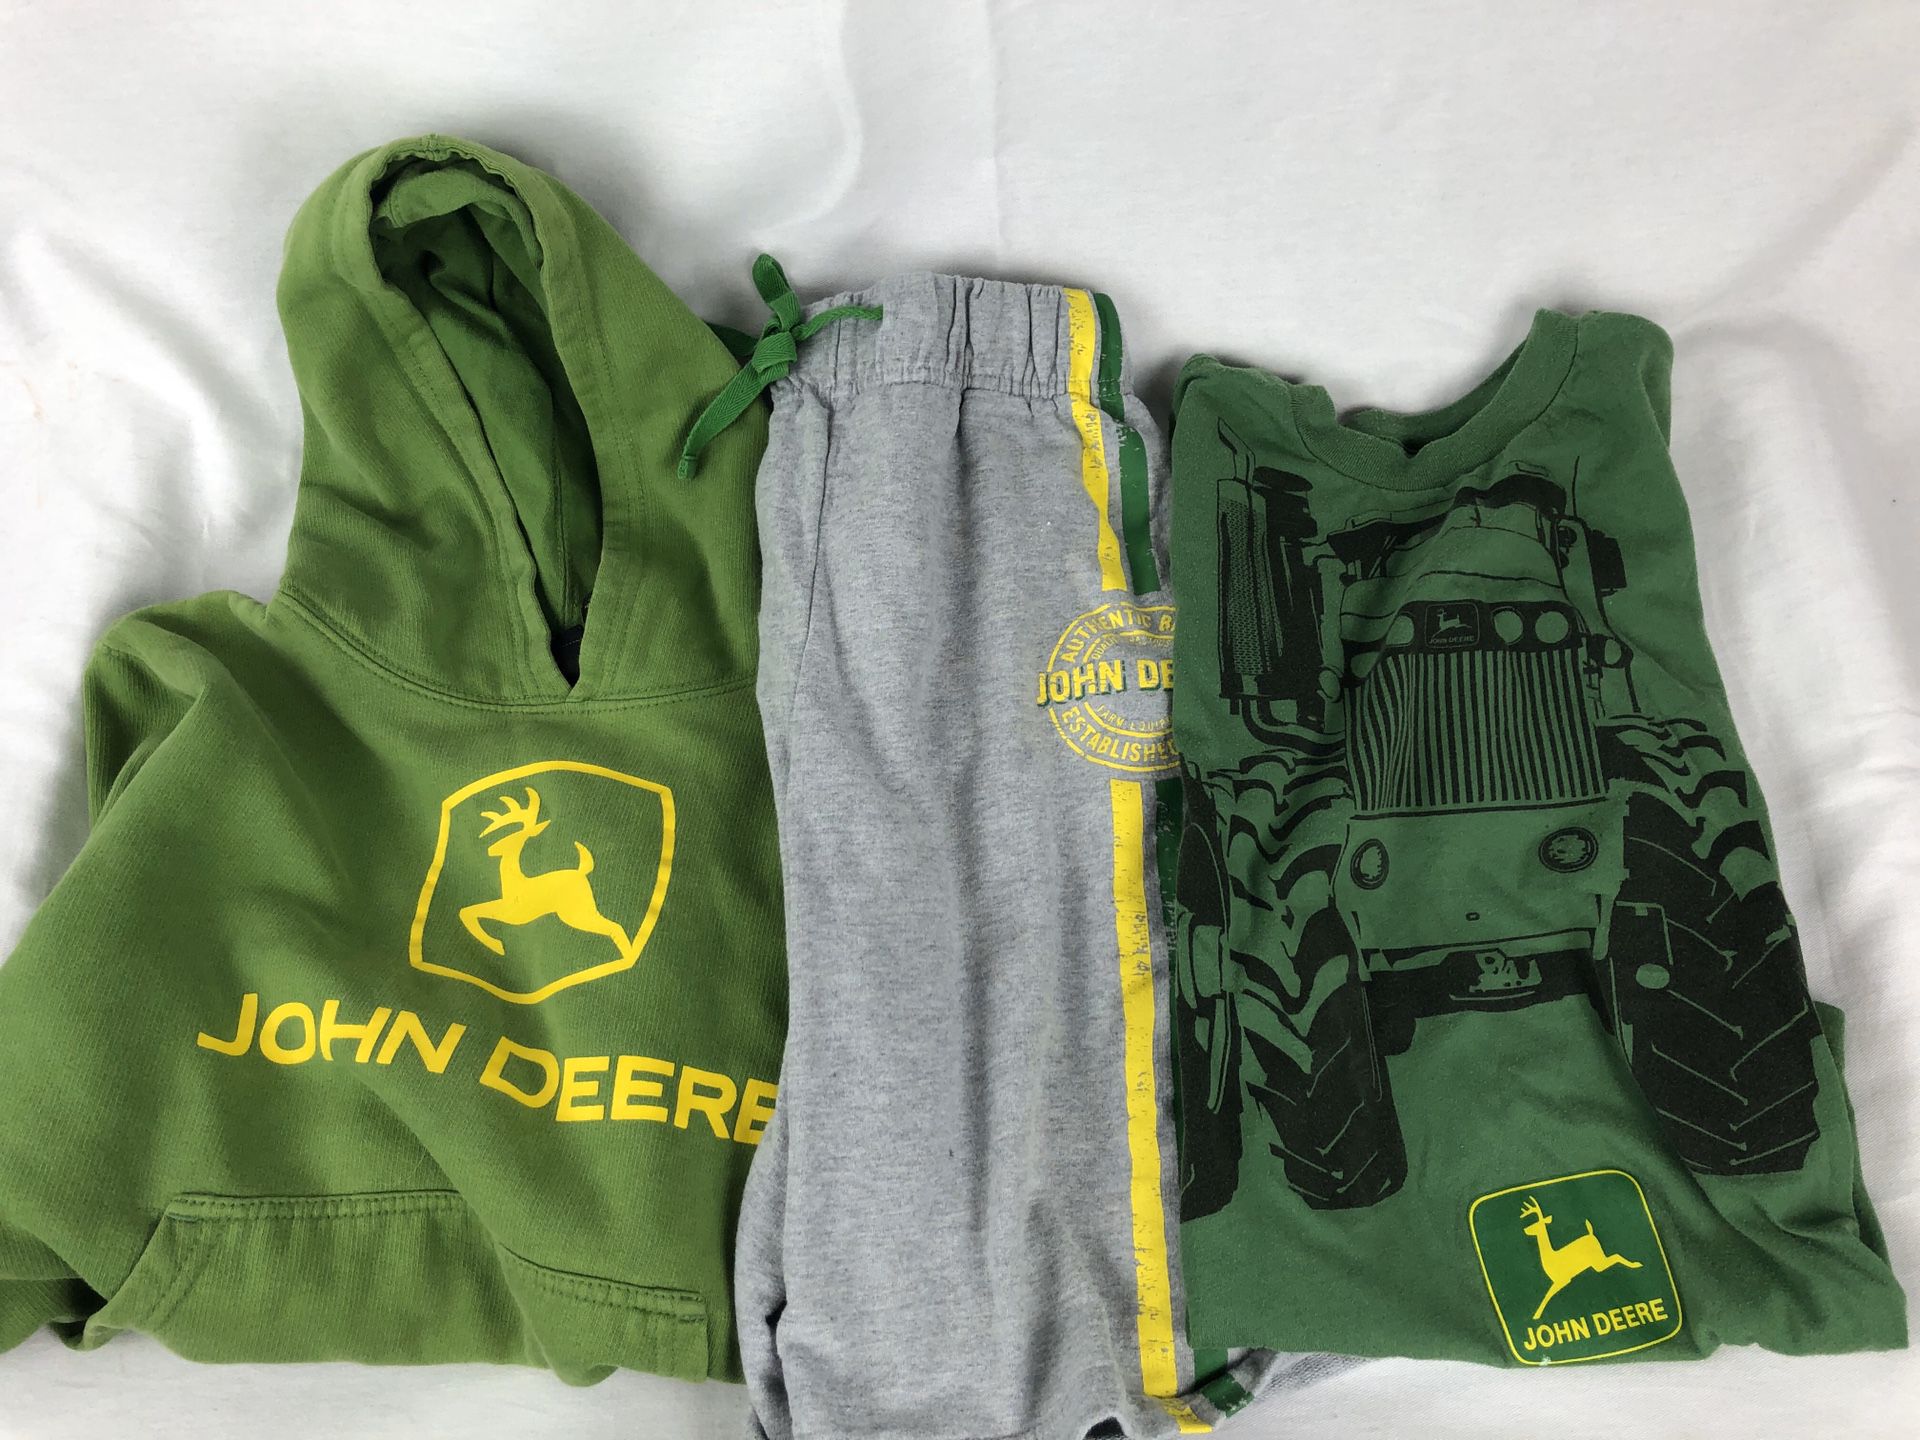 John Deere kids clothes lot - Size M -sweatshirt, T-shirt and shorts